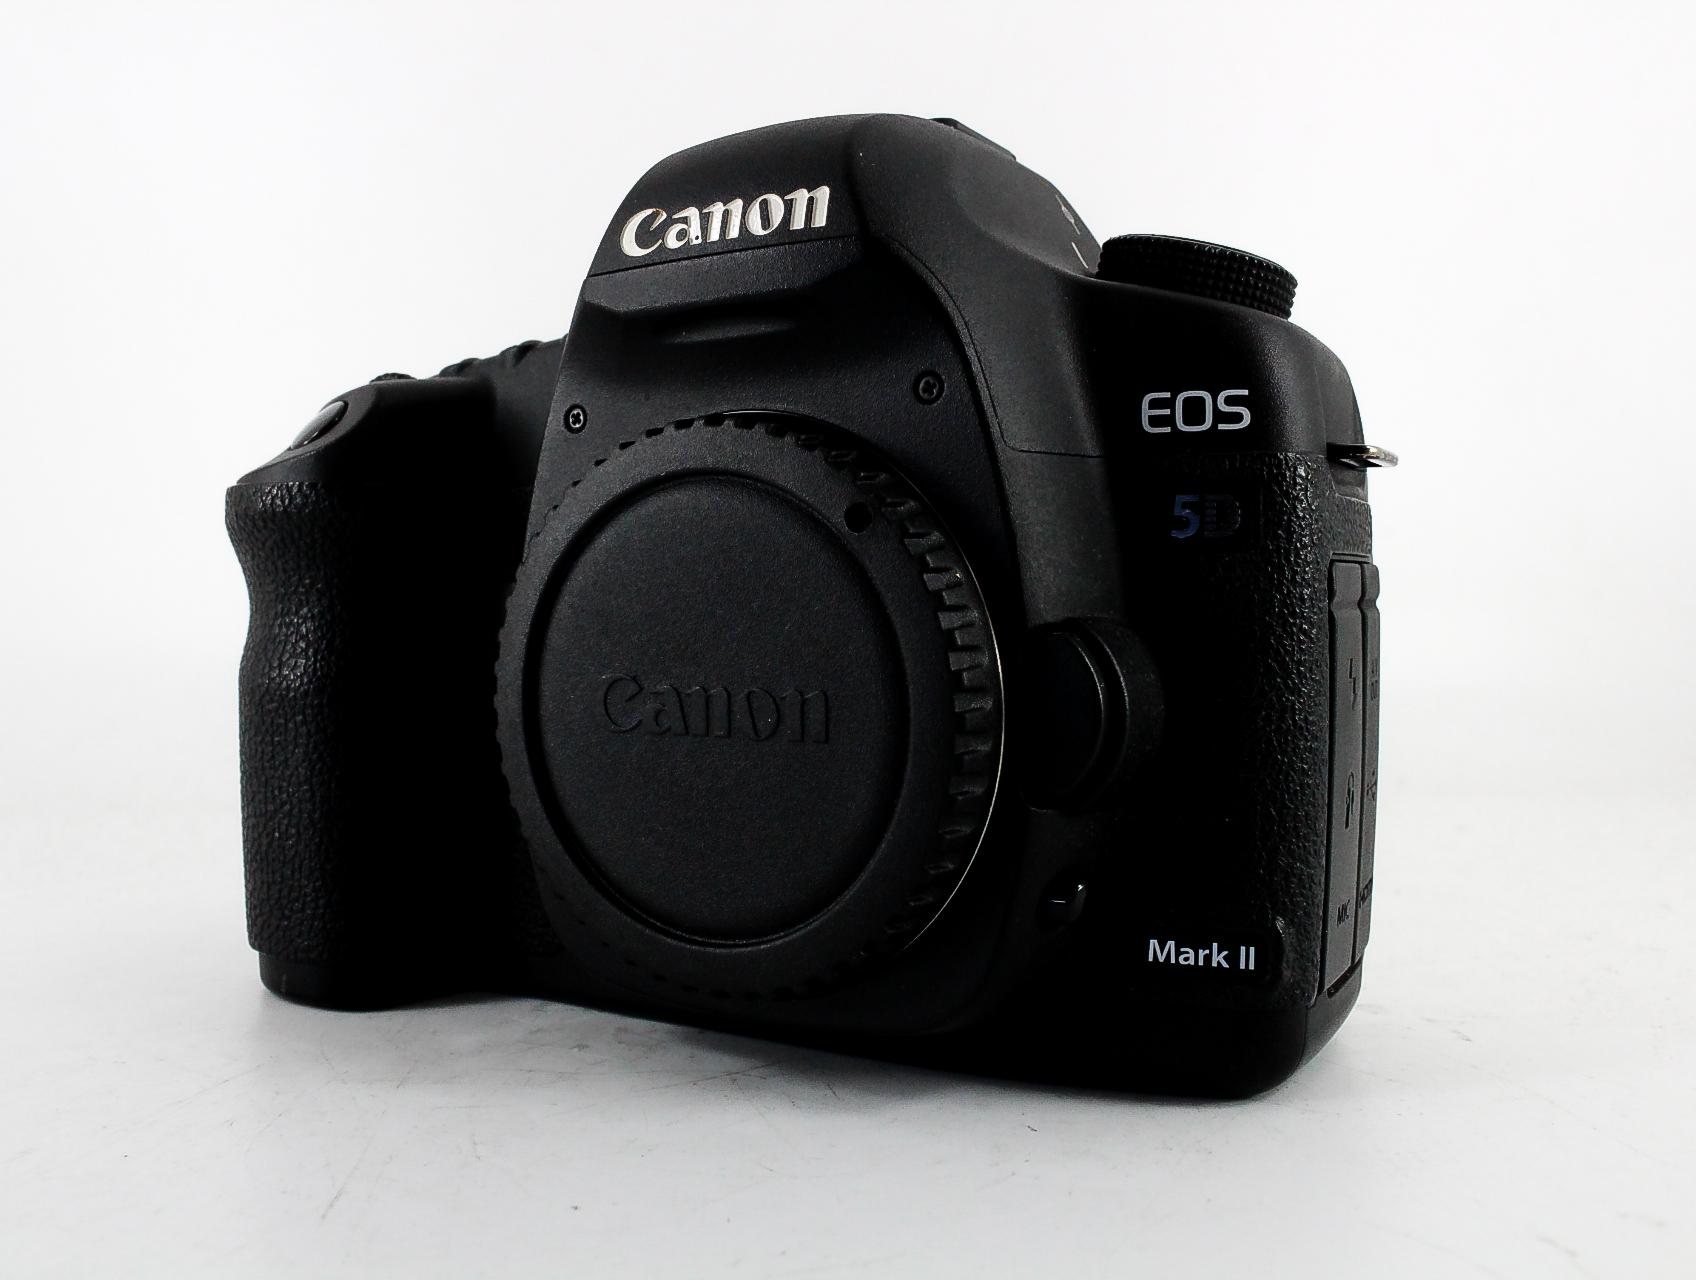 Canon 5D Mark II Specs image 